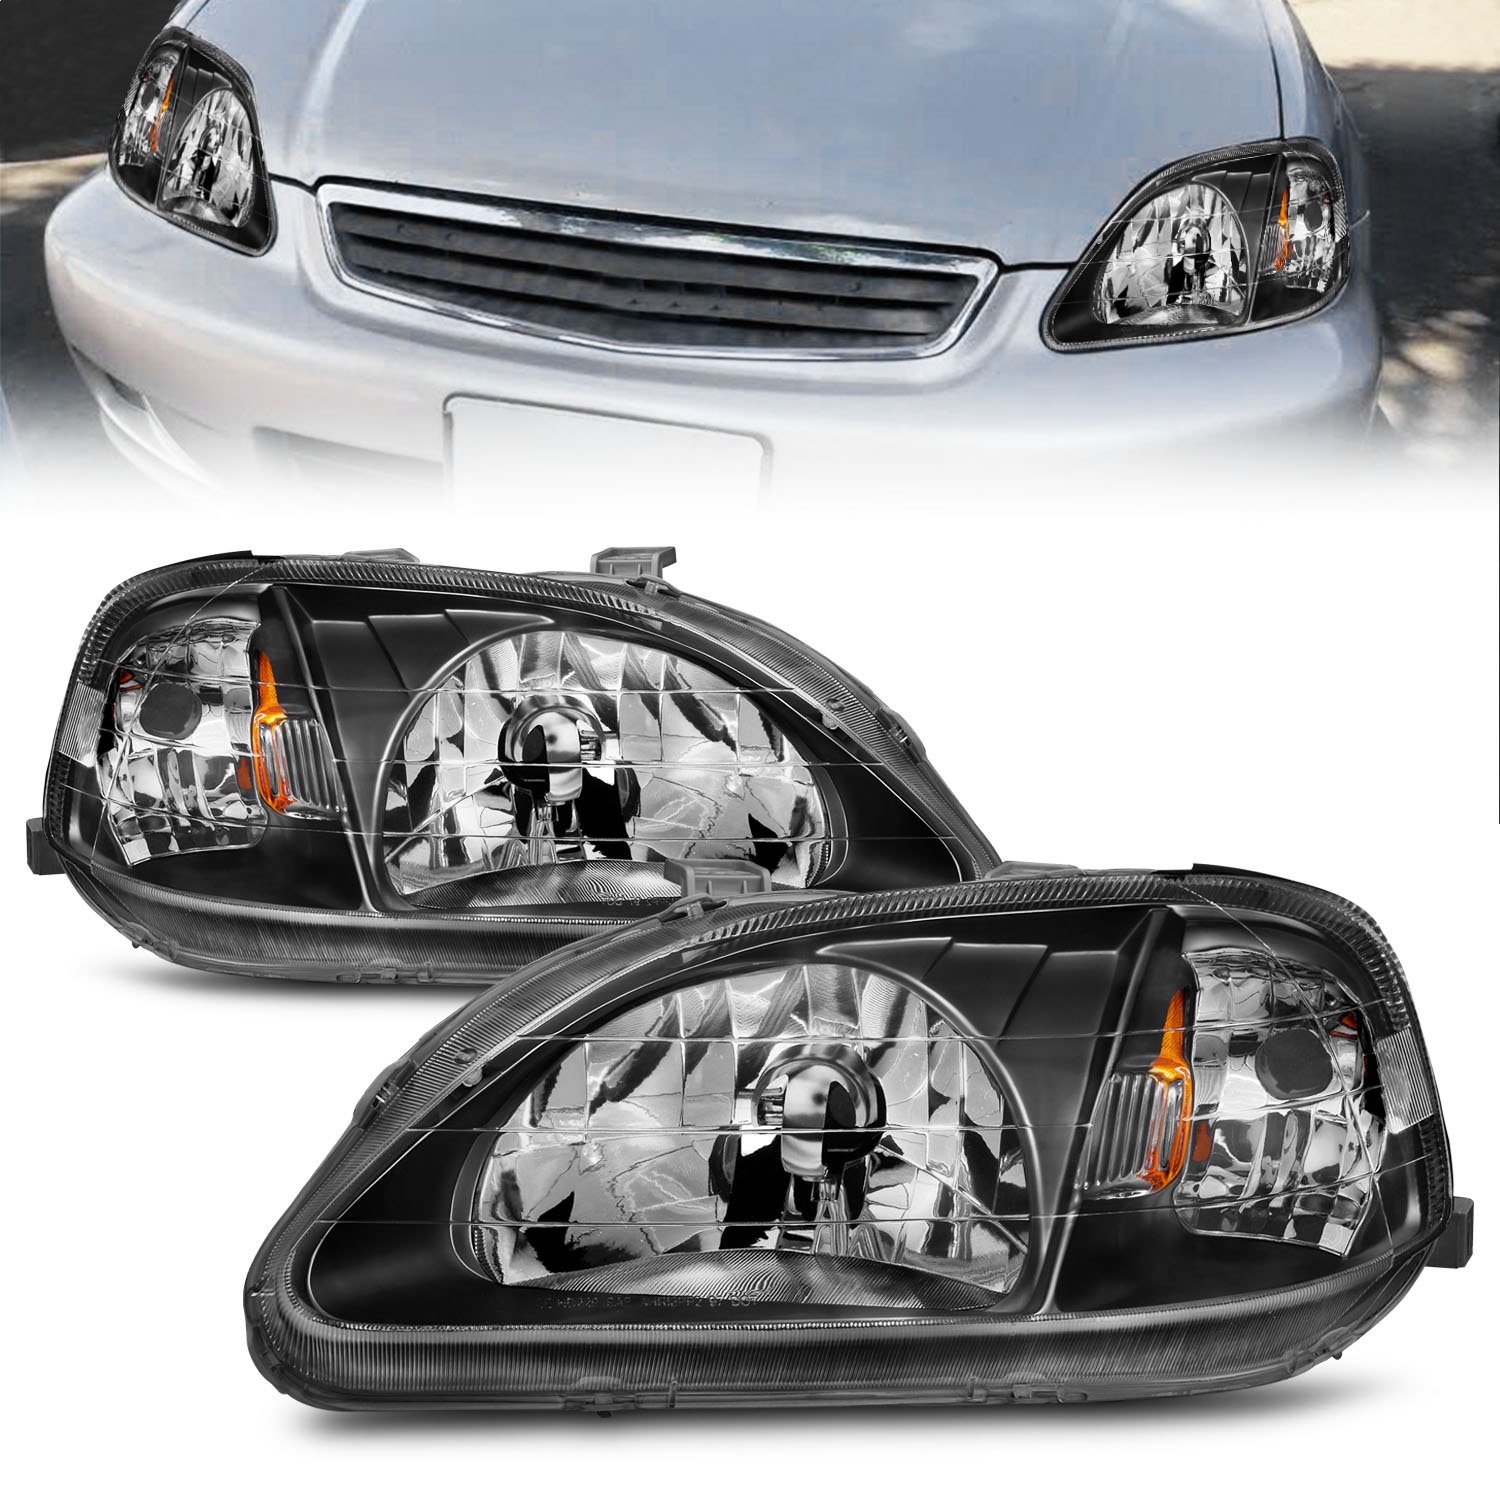 Anzo USA 121070 Crystal Headlight Set Fits 99-00 Civic